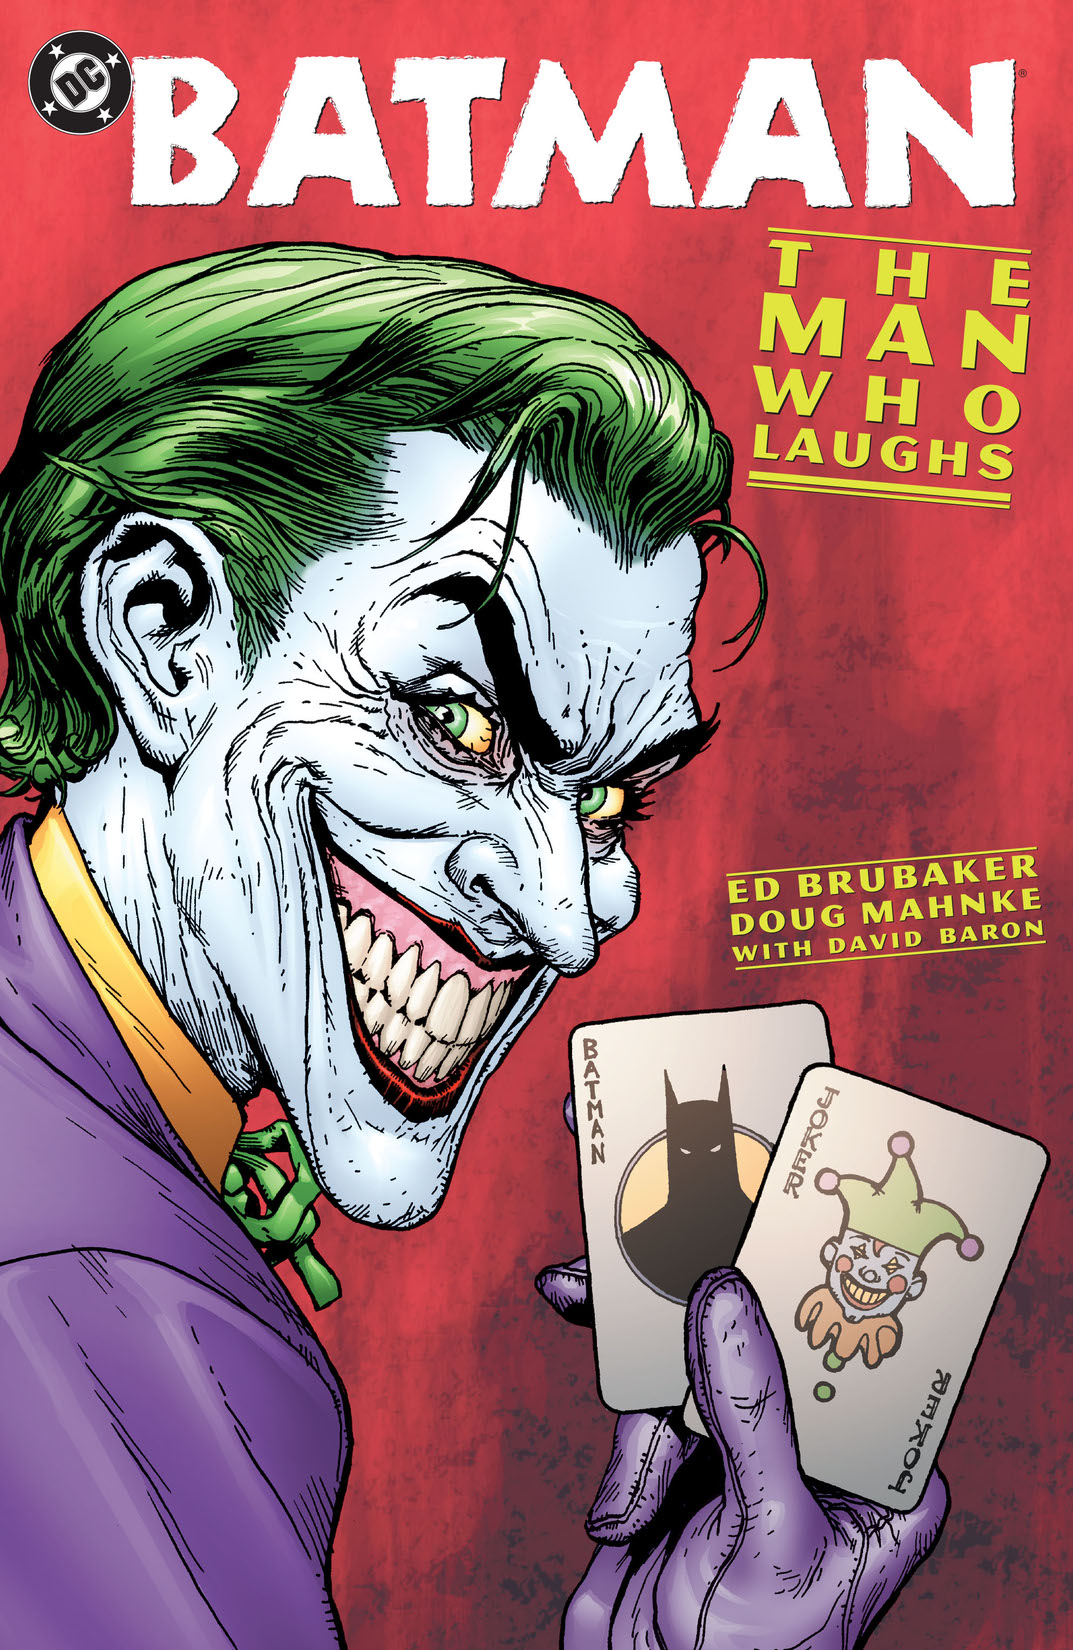 Batman: The Man Who Laughs #1 preview images